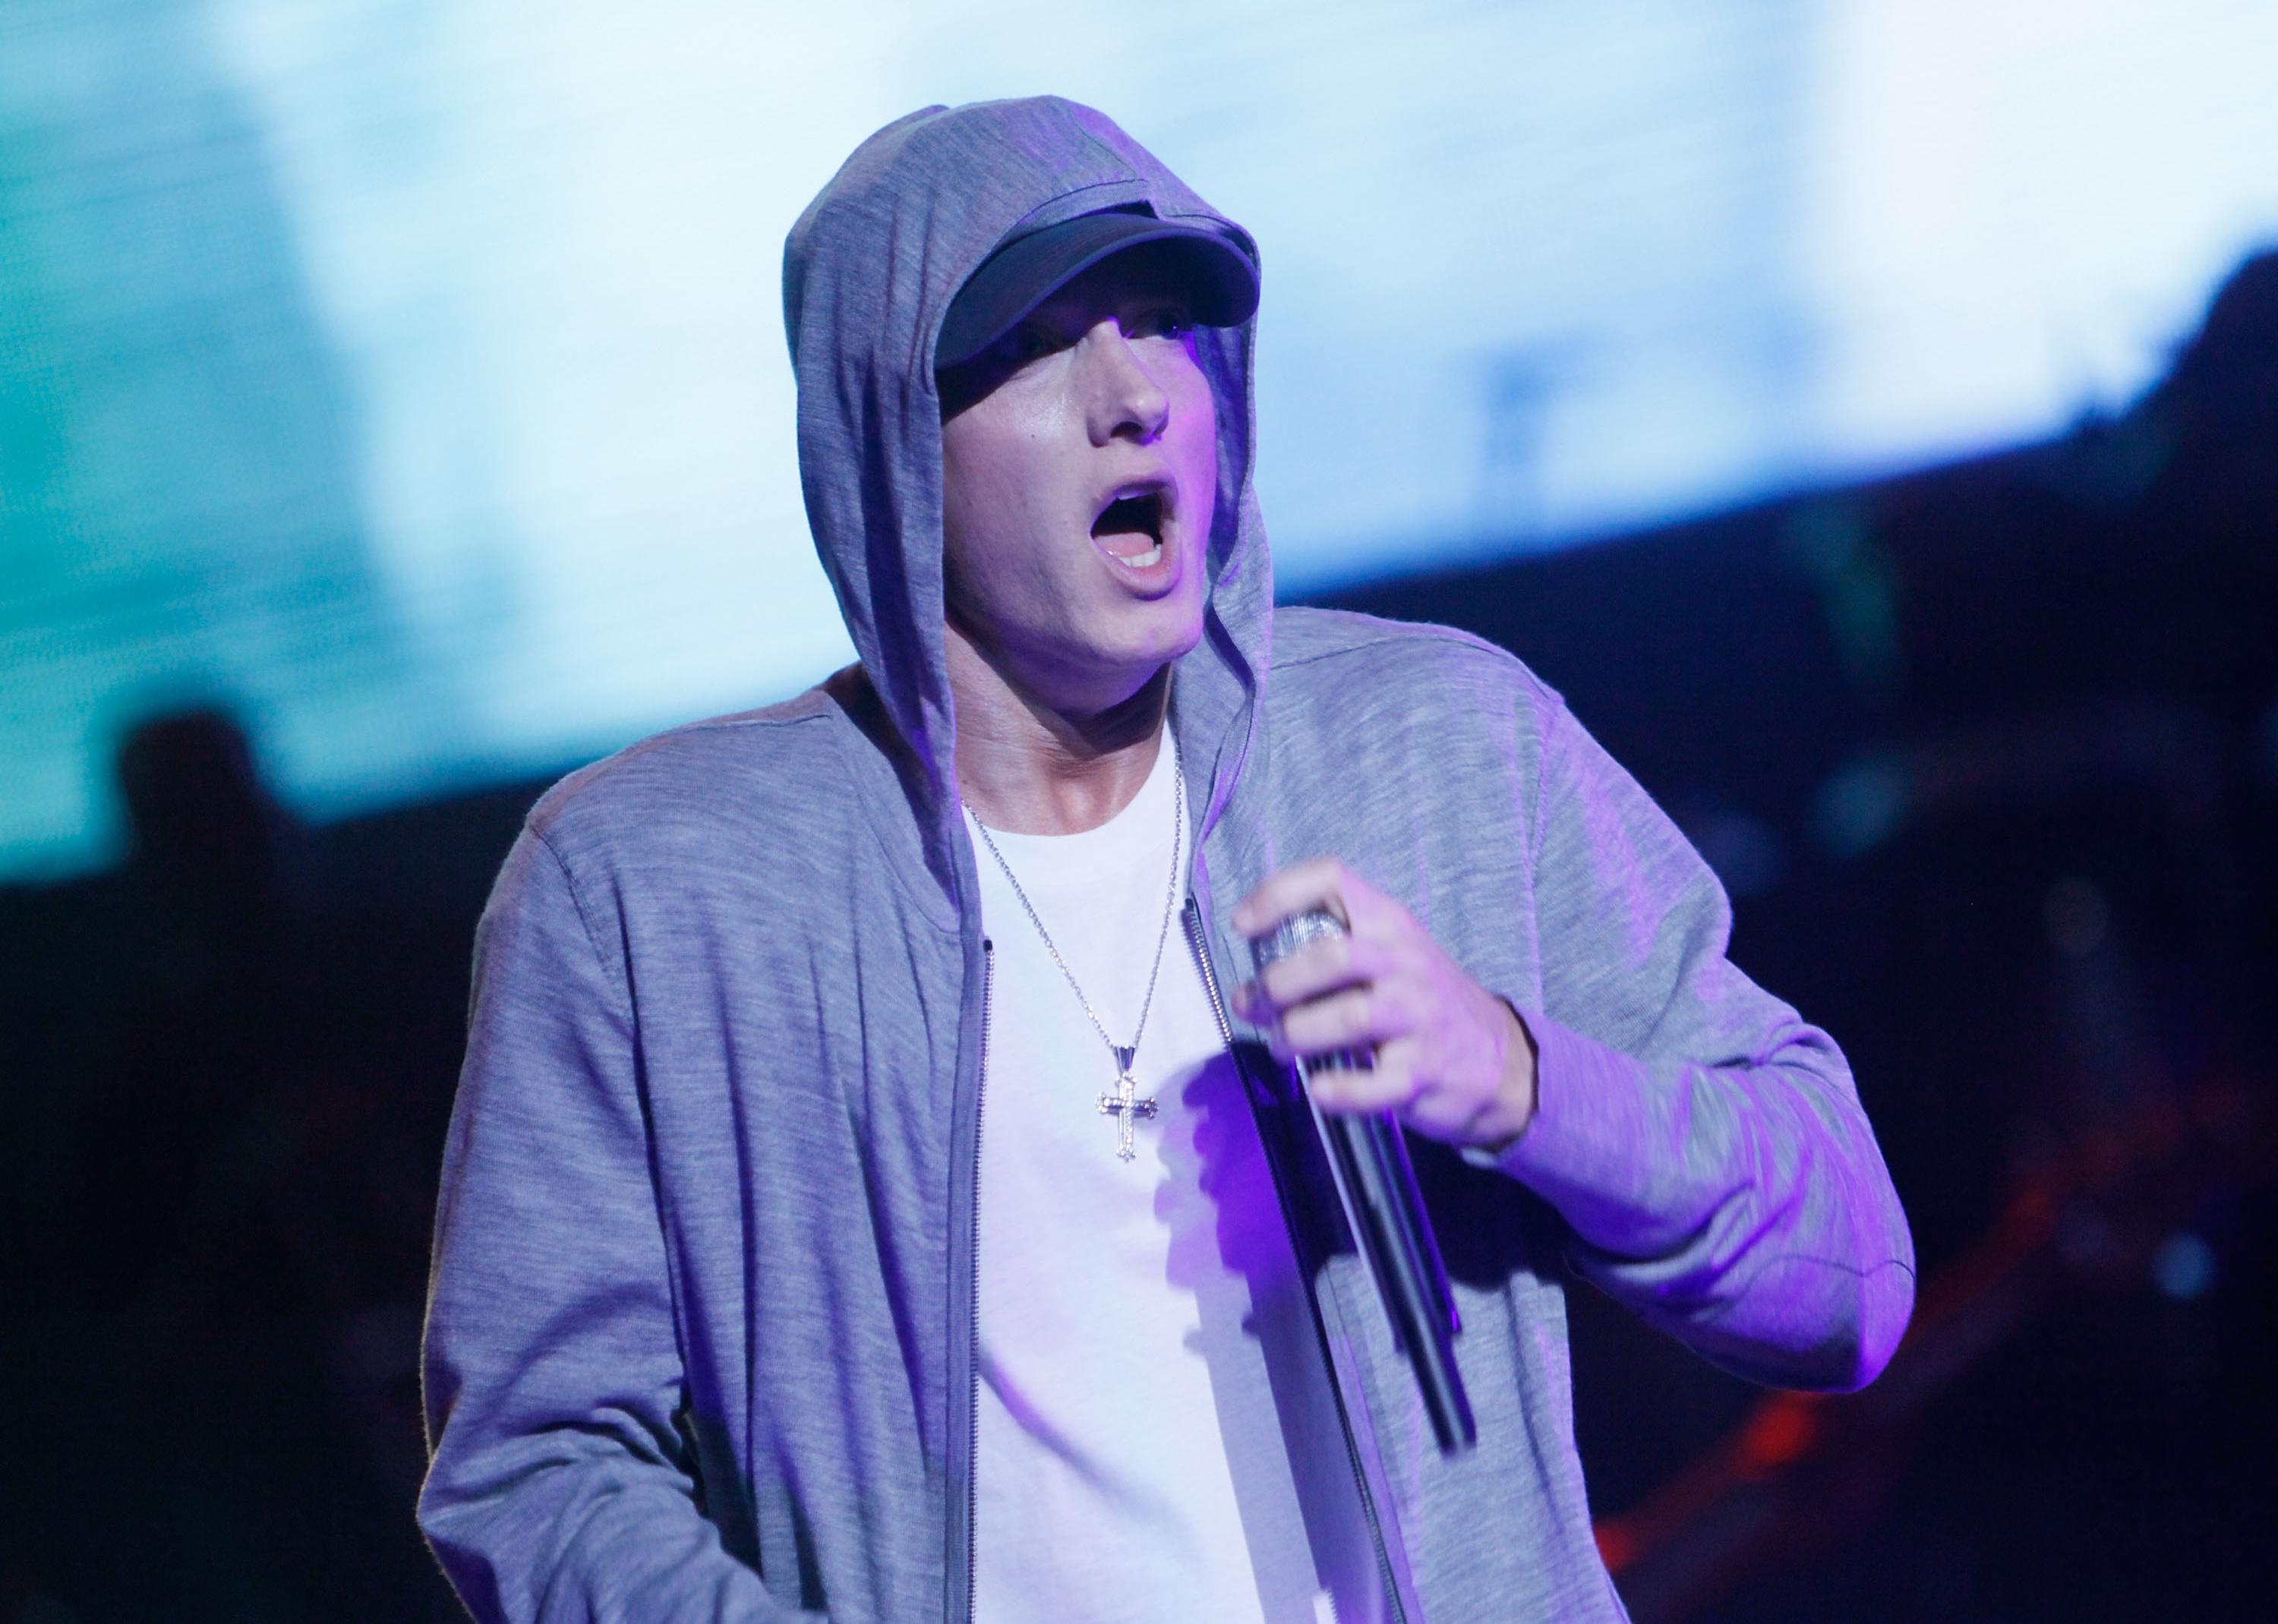 Eminem onstage in a hoodie and hat.